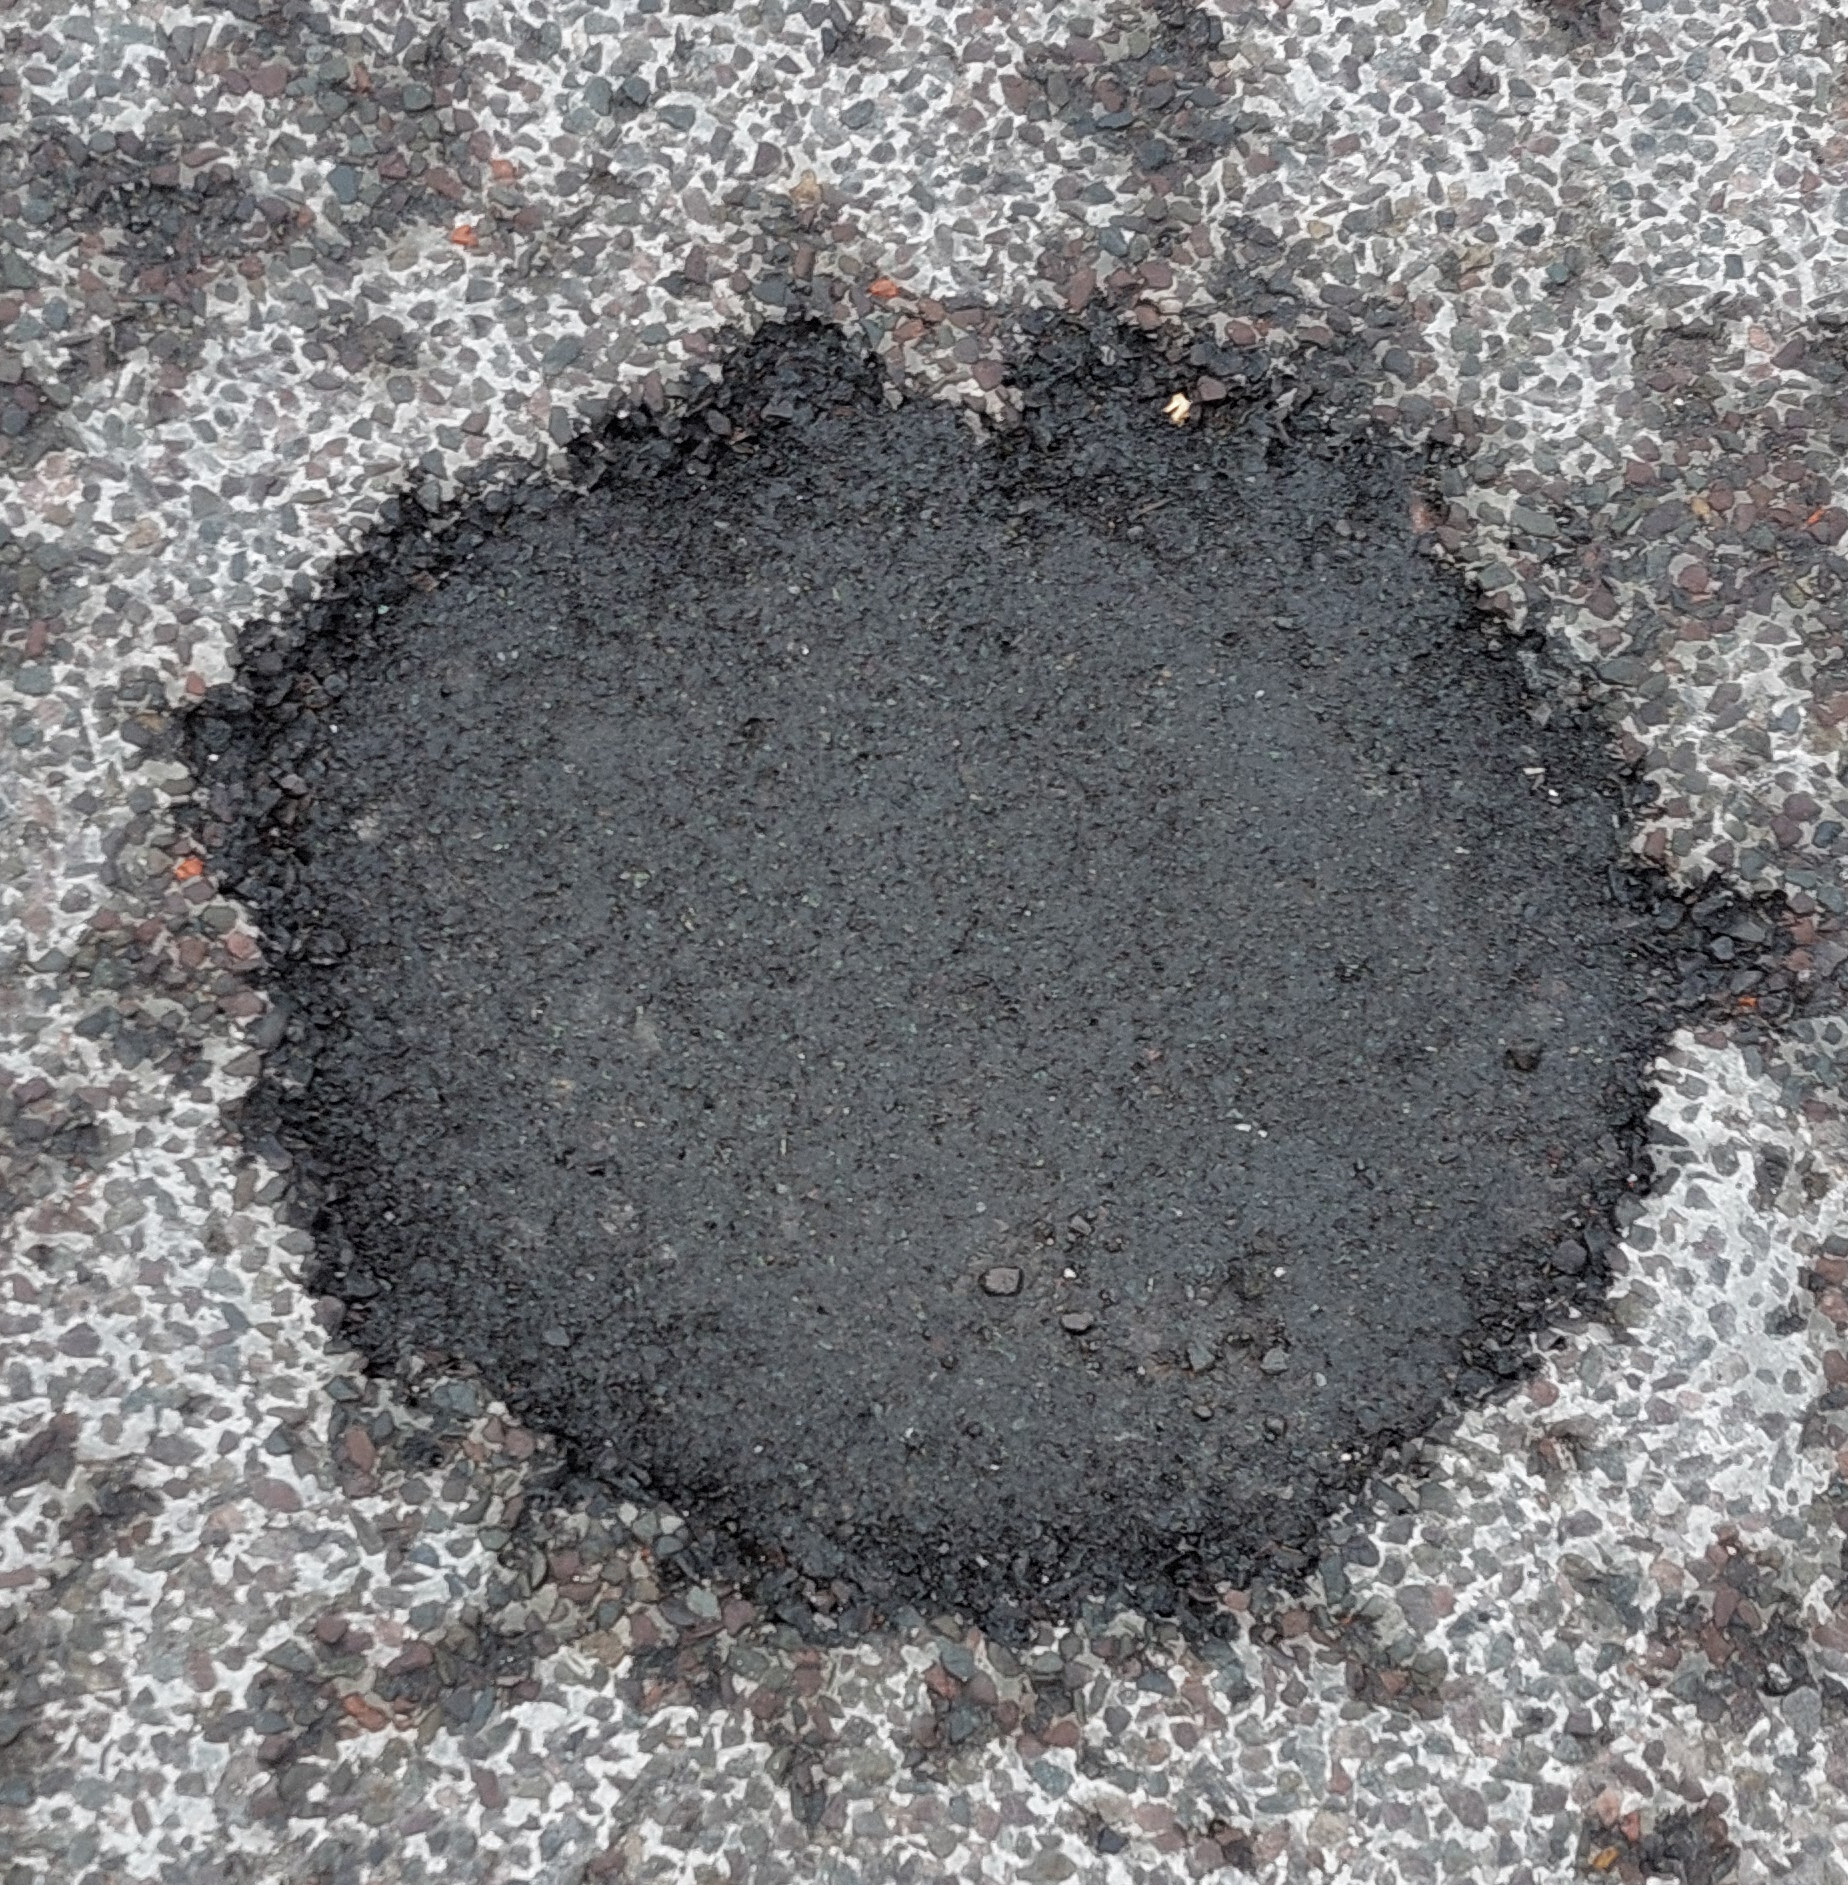 VIDEO: Potholes in Skipton